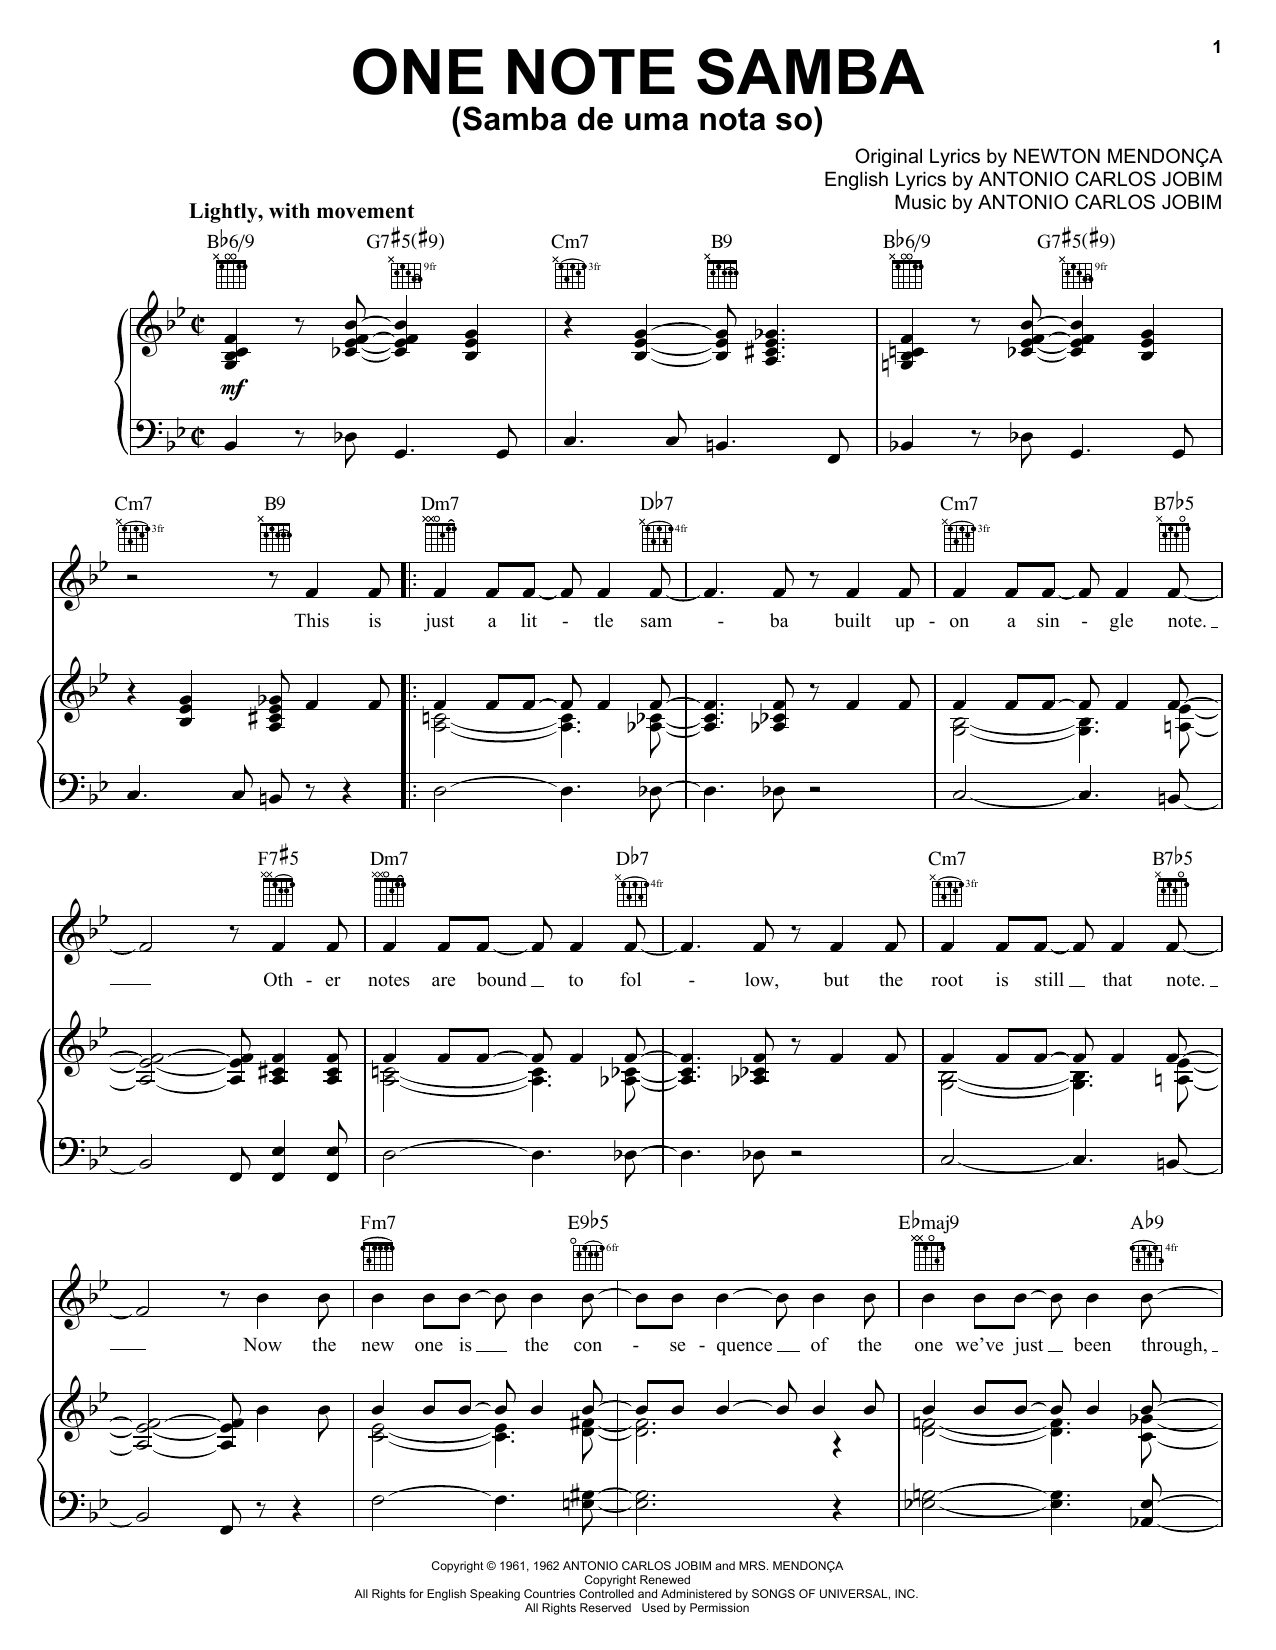 Download Antonio Carlos Jobim One Note Samba (Samba De Uma Nota So) Sheet Music and learn how to play Cello PDF digital score in minutes